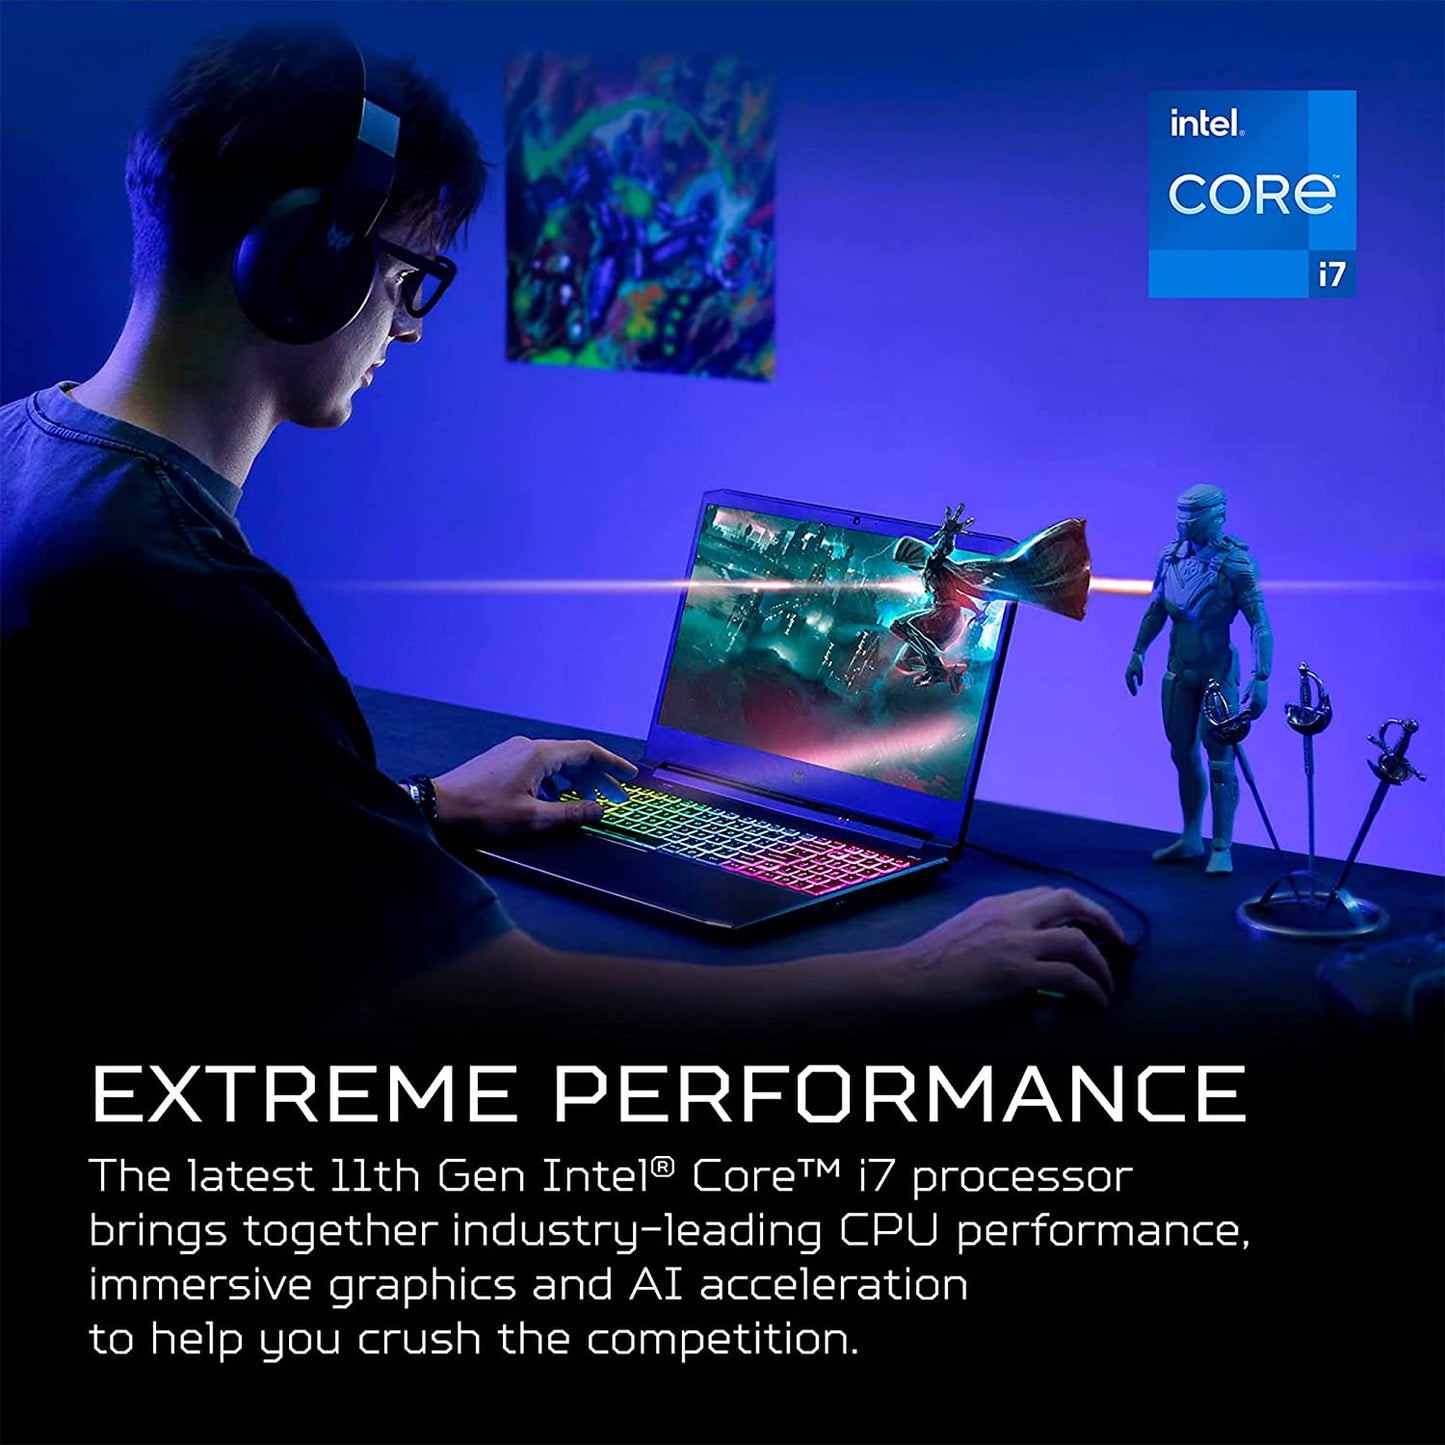 Acer Predator Helios 300 PH315-54-760S laptop con Intel i7-11800H, NVIDIA GeForce RTX 3060, 16GB DDR4, SSD 512GB, Teclado RGB